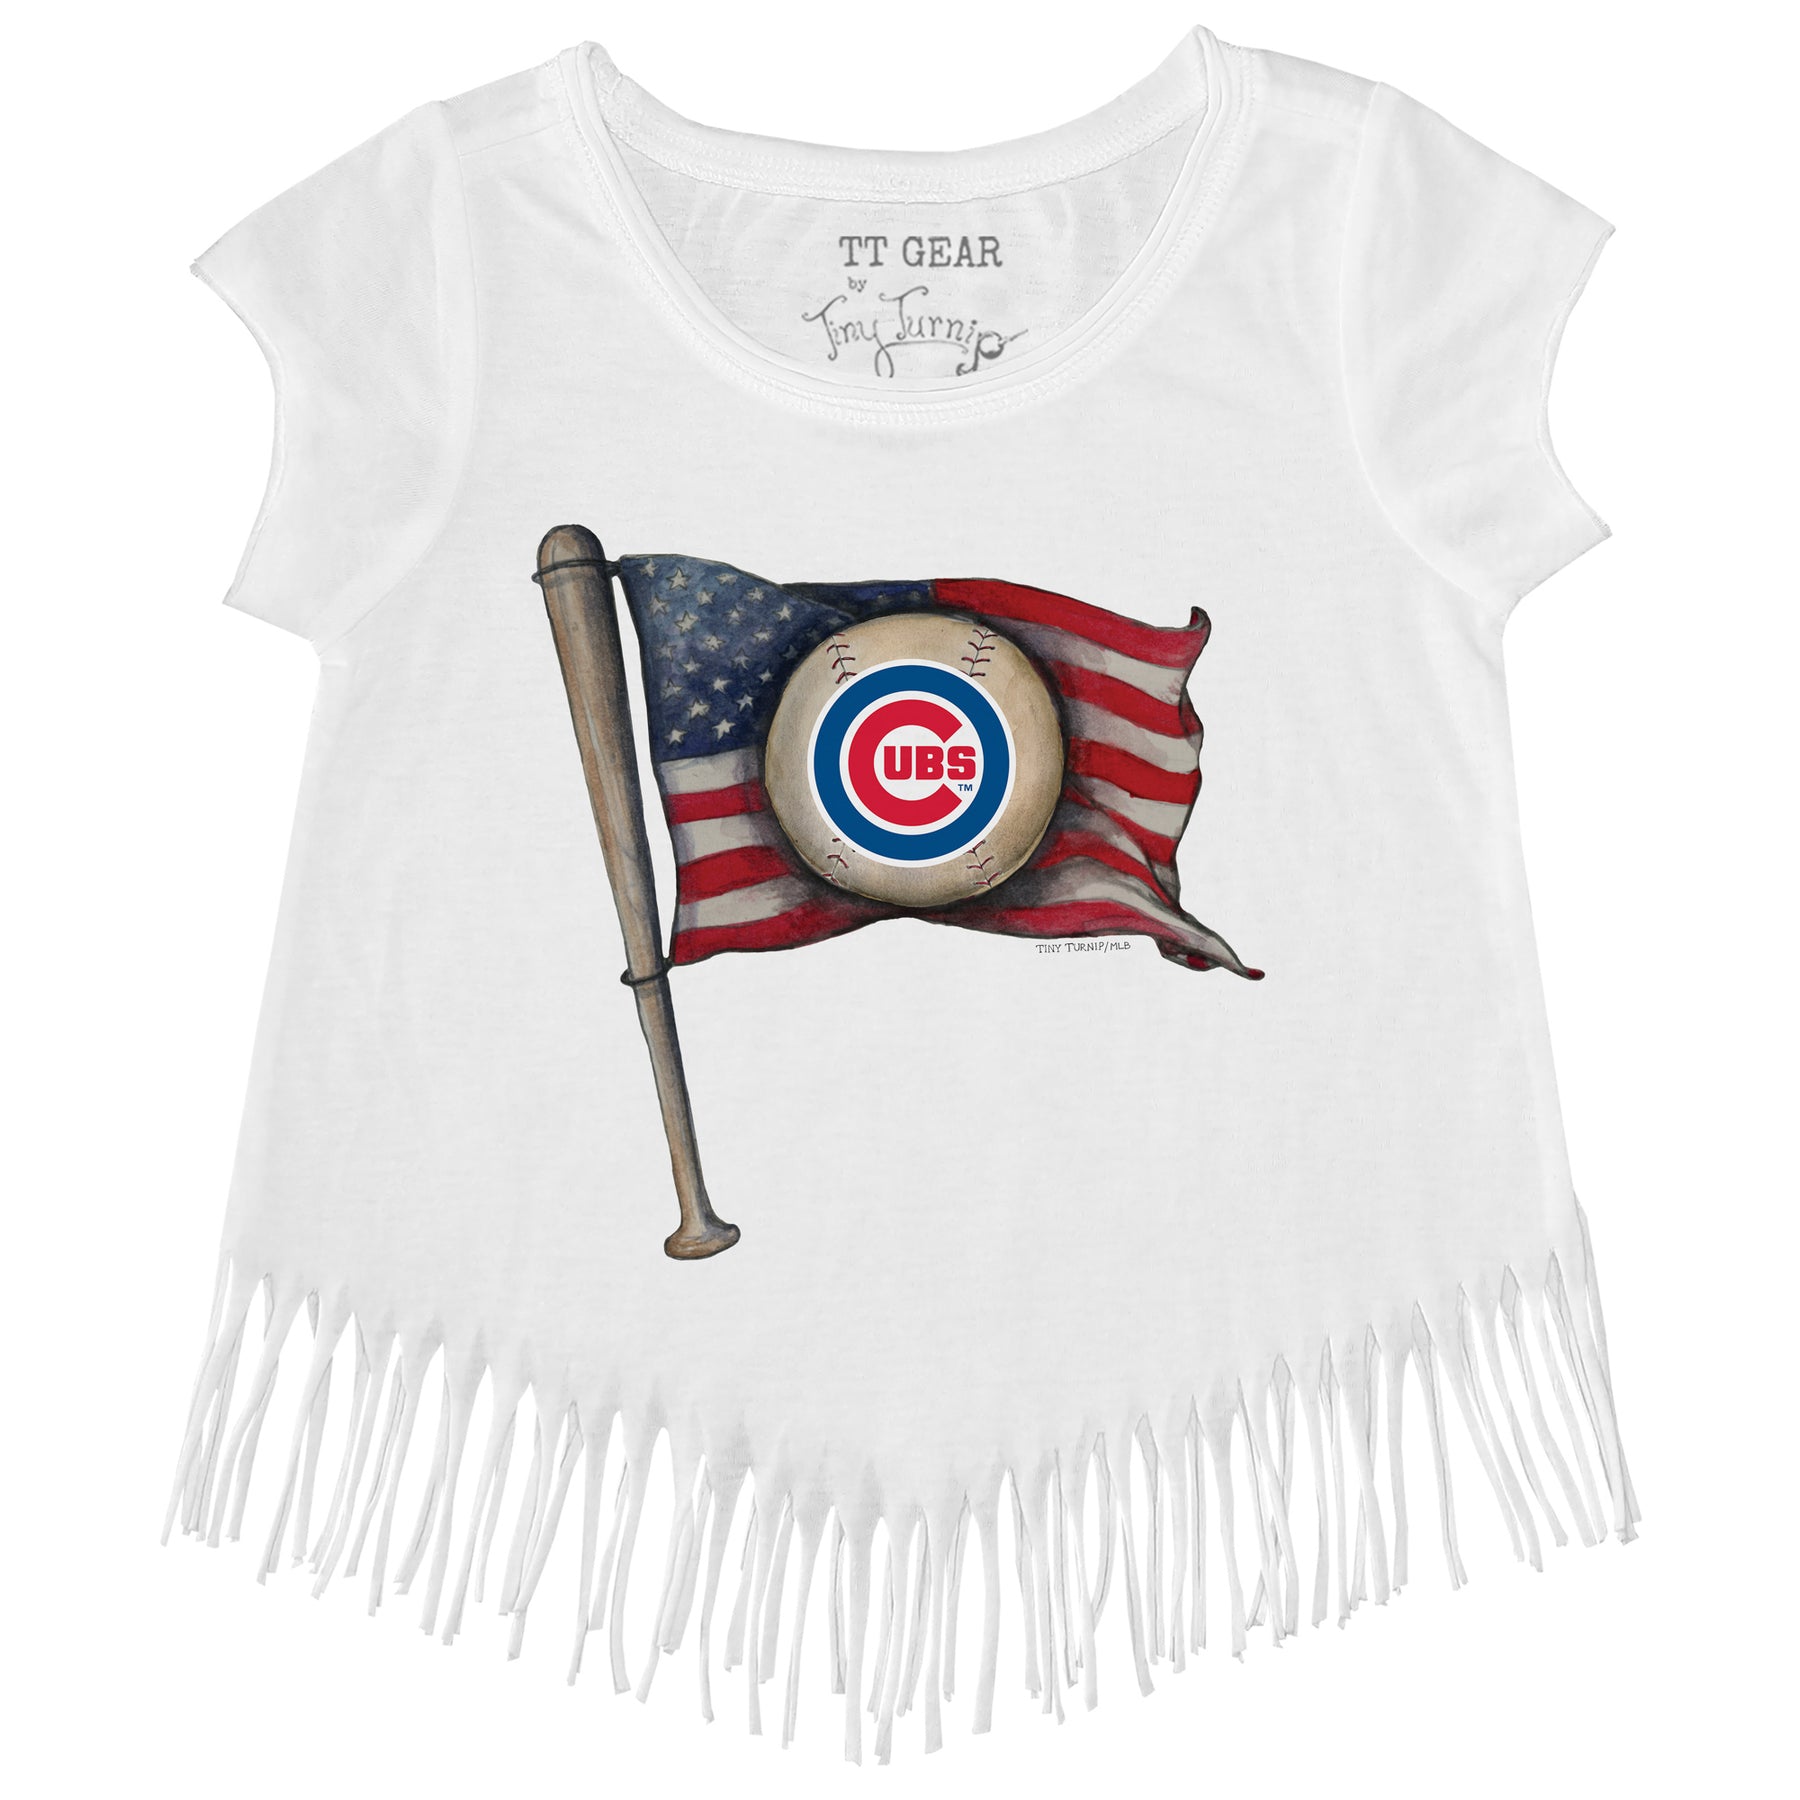 Girls Toddler Tiny Turnip Royal Chicago Cubs 2023 Spring Training Fringe T-Shirt Size:3T